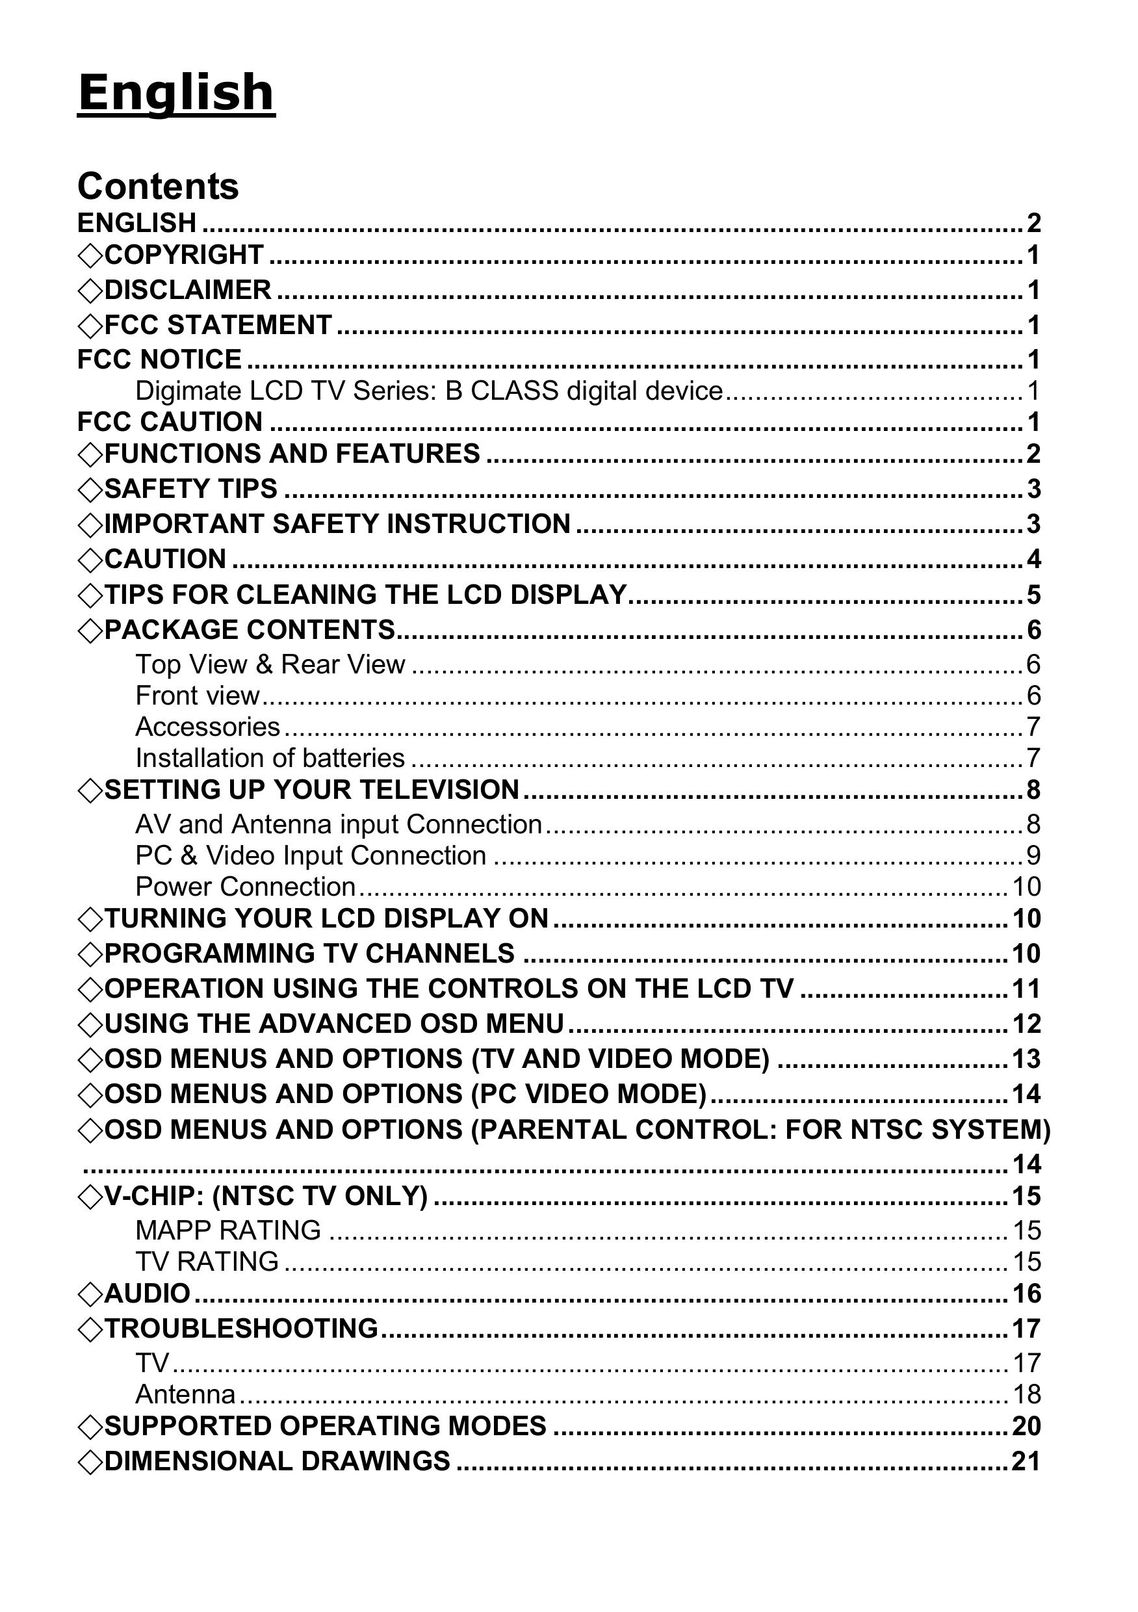 Digimate LTV-2007 Flat Panel Television User Manual